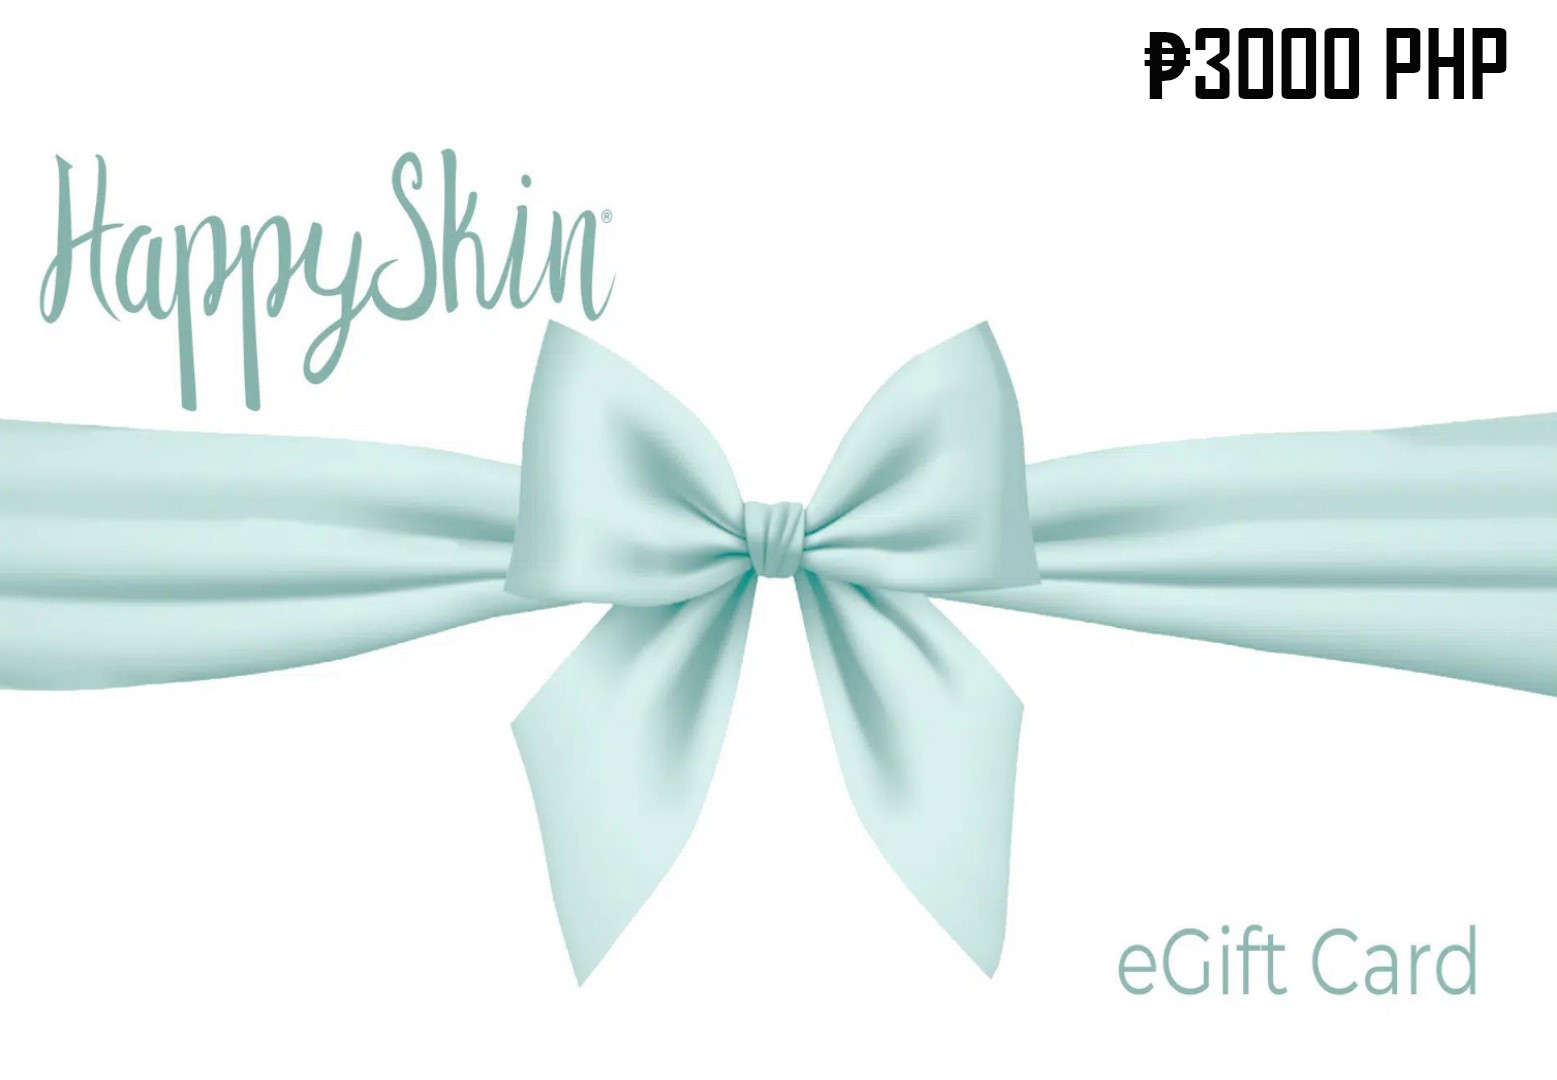 Happy Skin ₱3000 PH Gift Card 62.52$